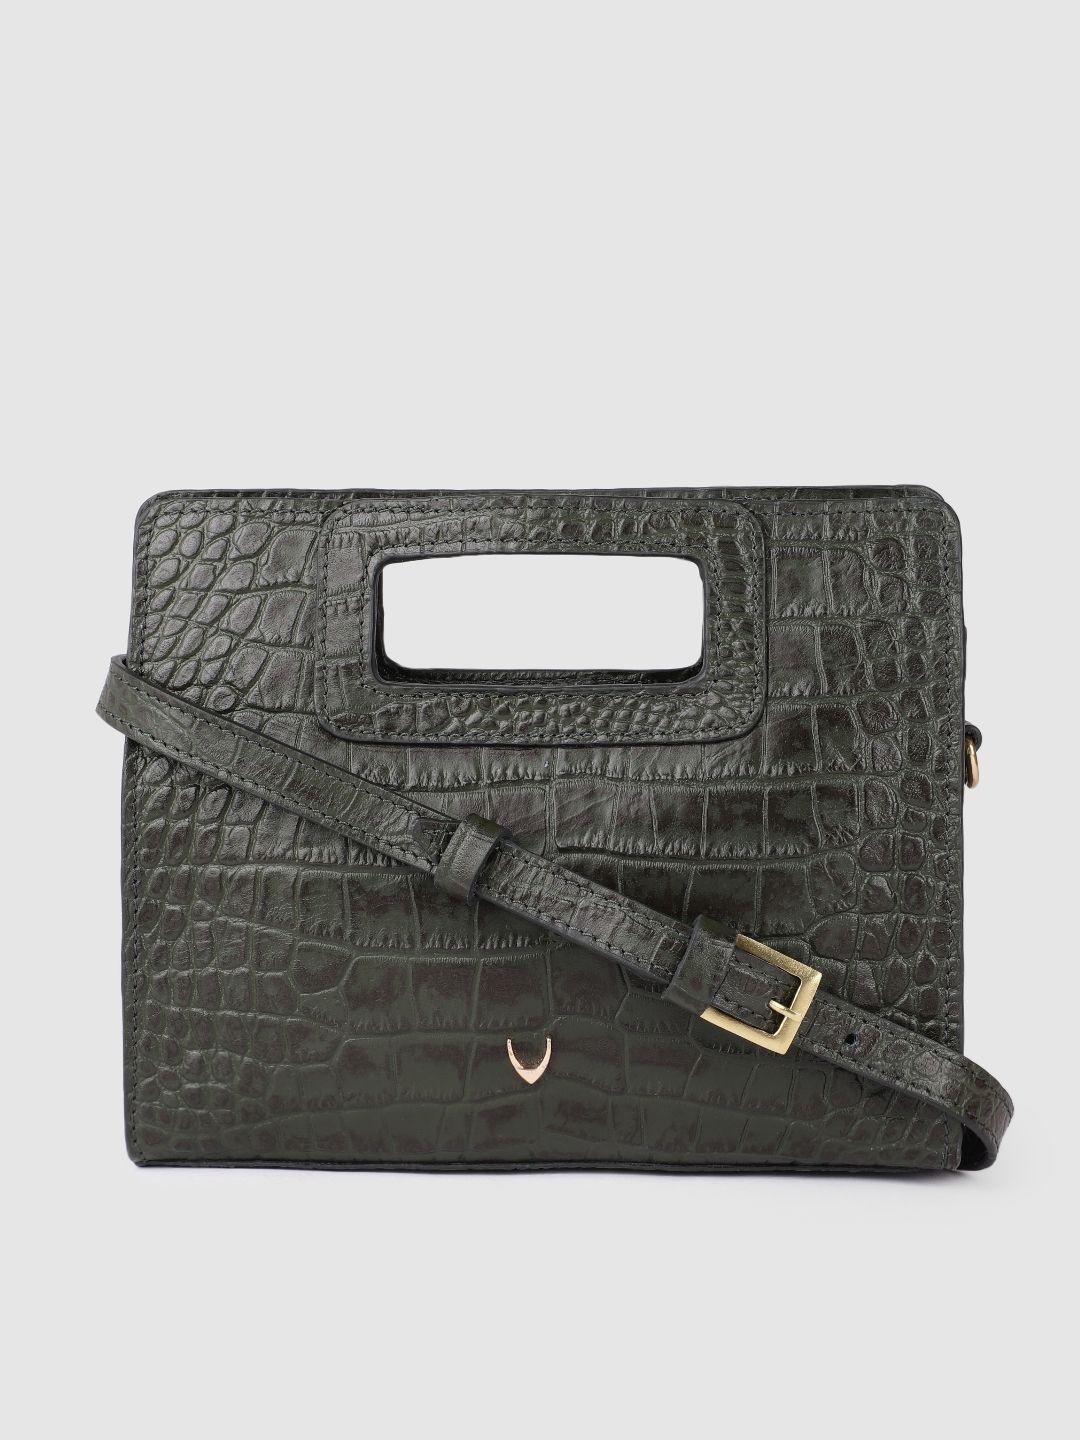 hidesign olive green animal textured leather structured sling bag